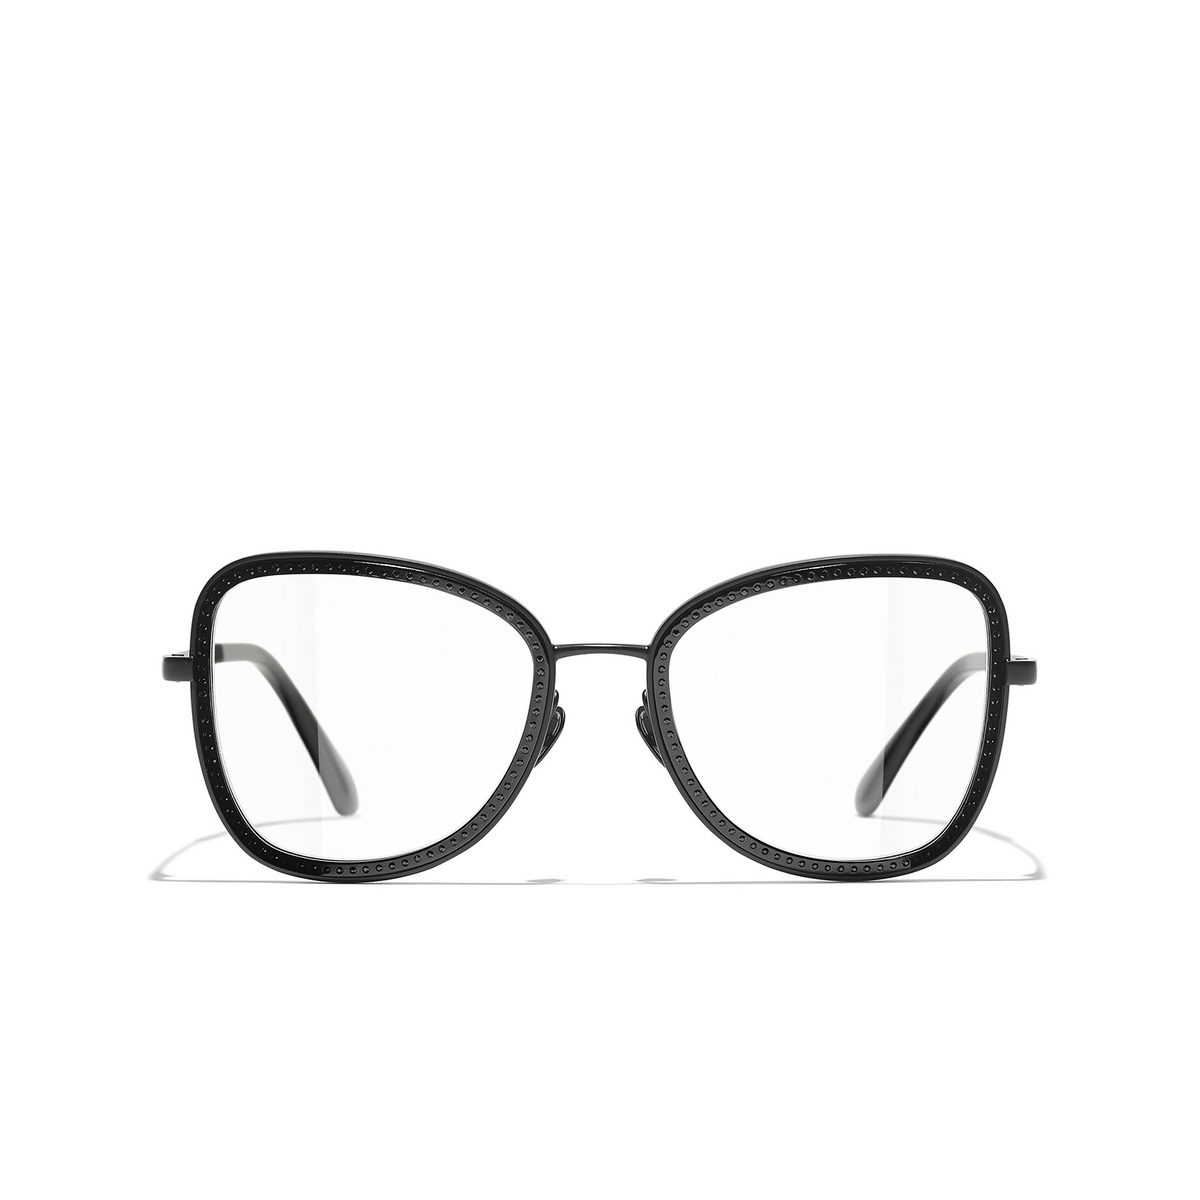 CHANEL square Eyeglasses C101 Black - front view